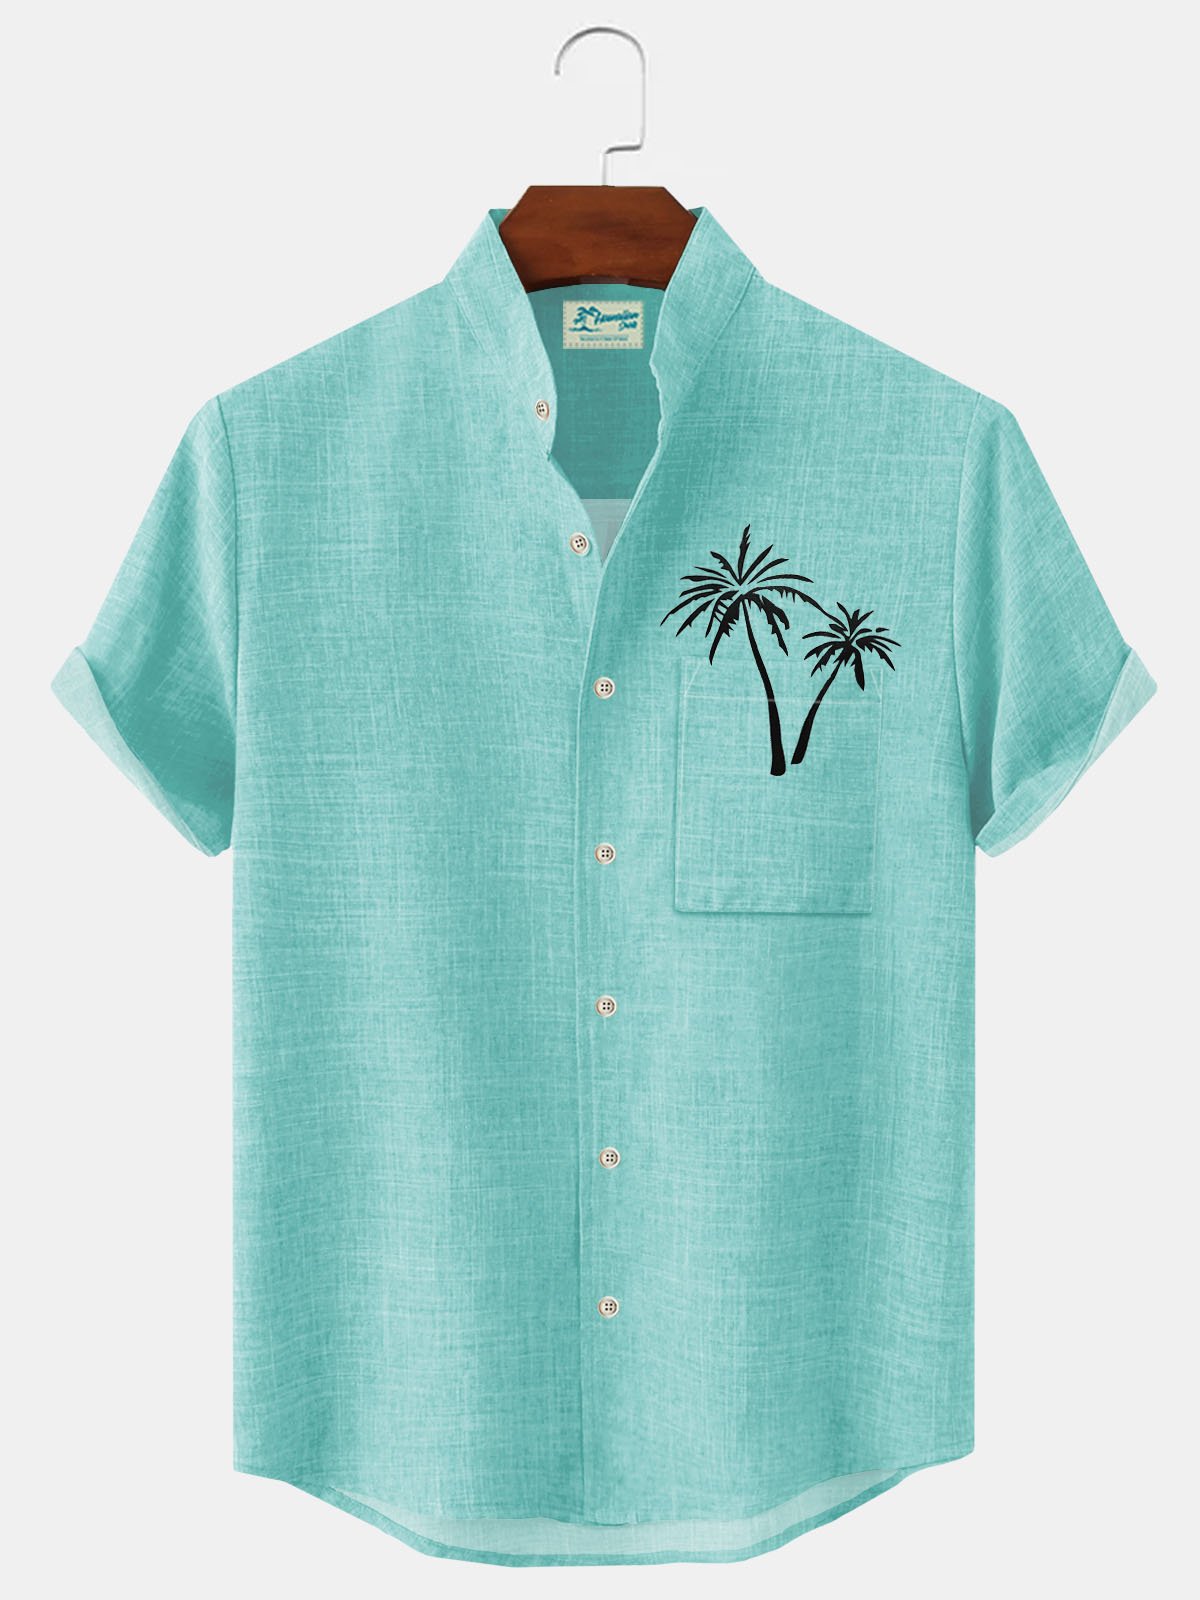 Royaura Natural Fiber Cool Hawaiian Coconut Stand Collar Men's Button Pocket Shirt